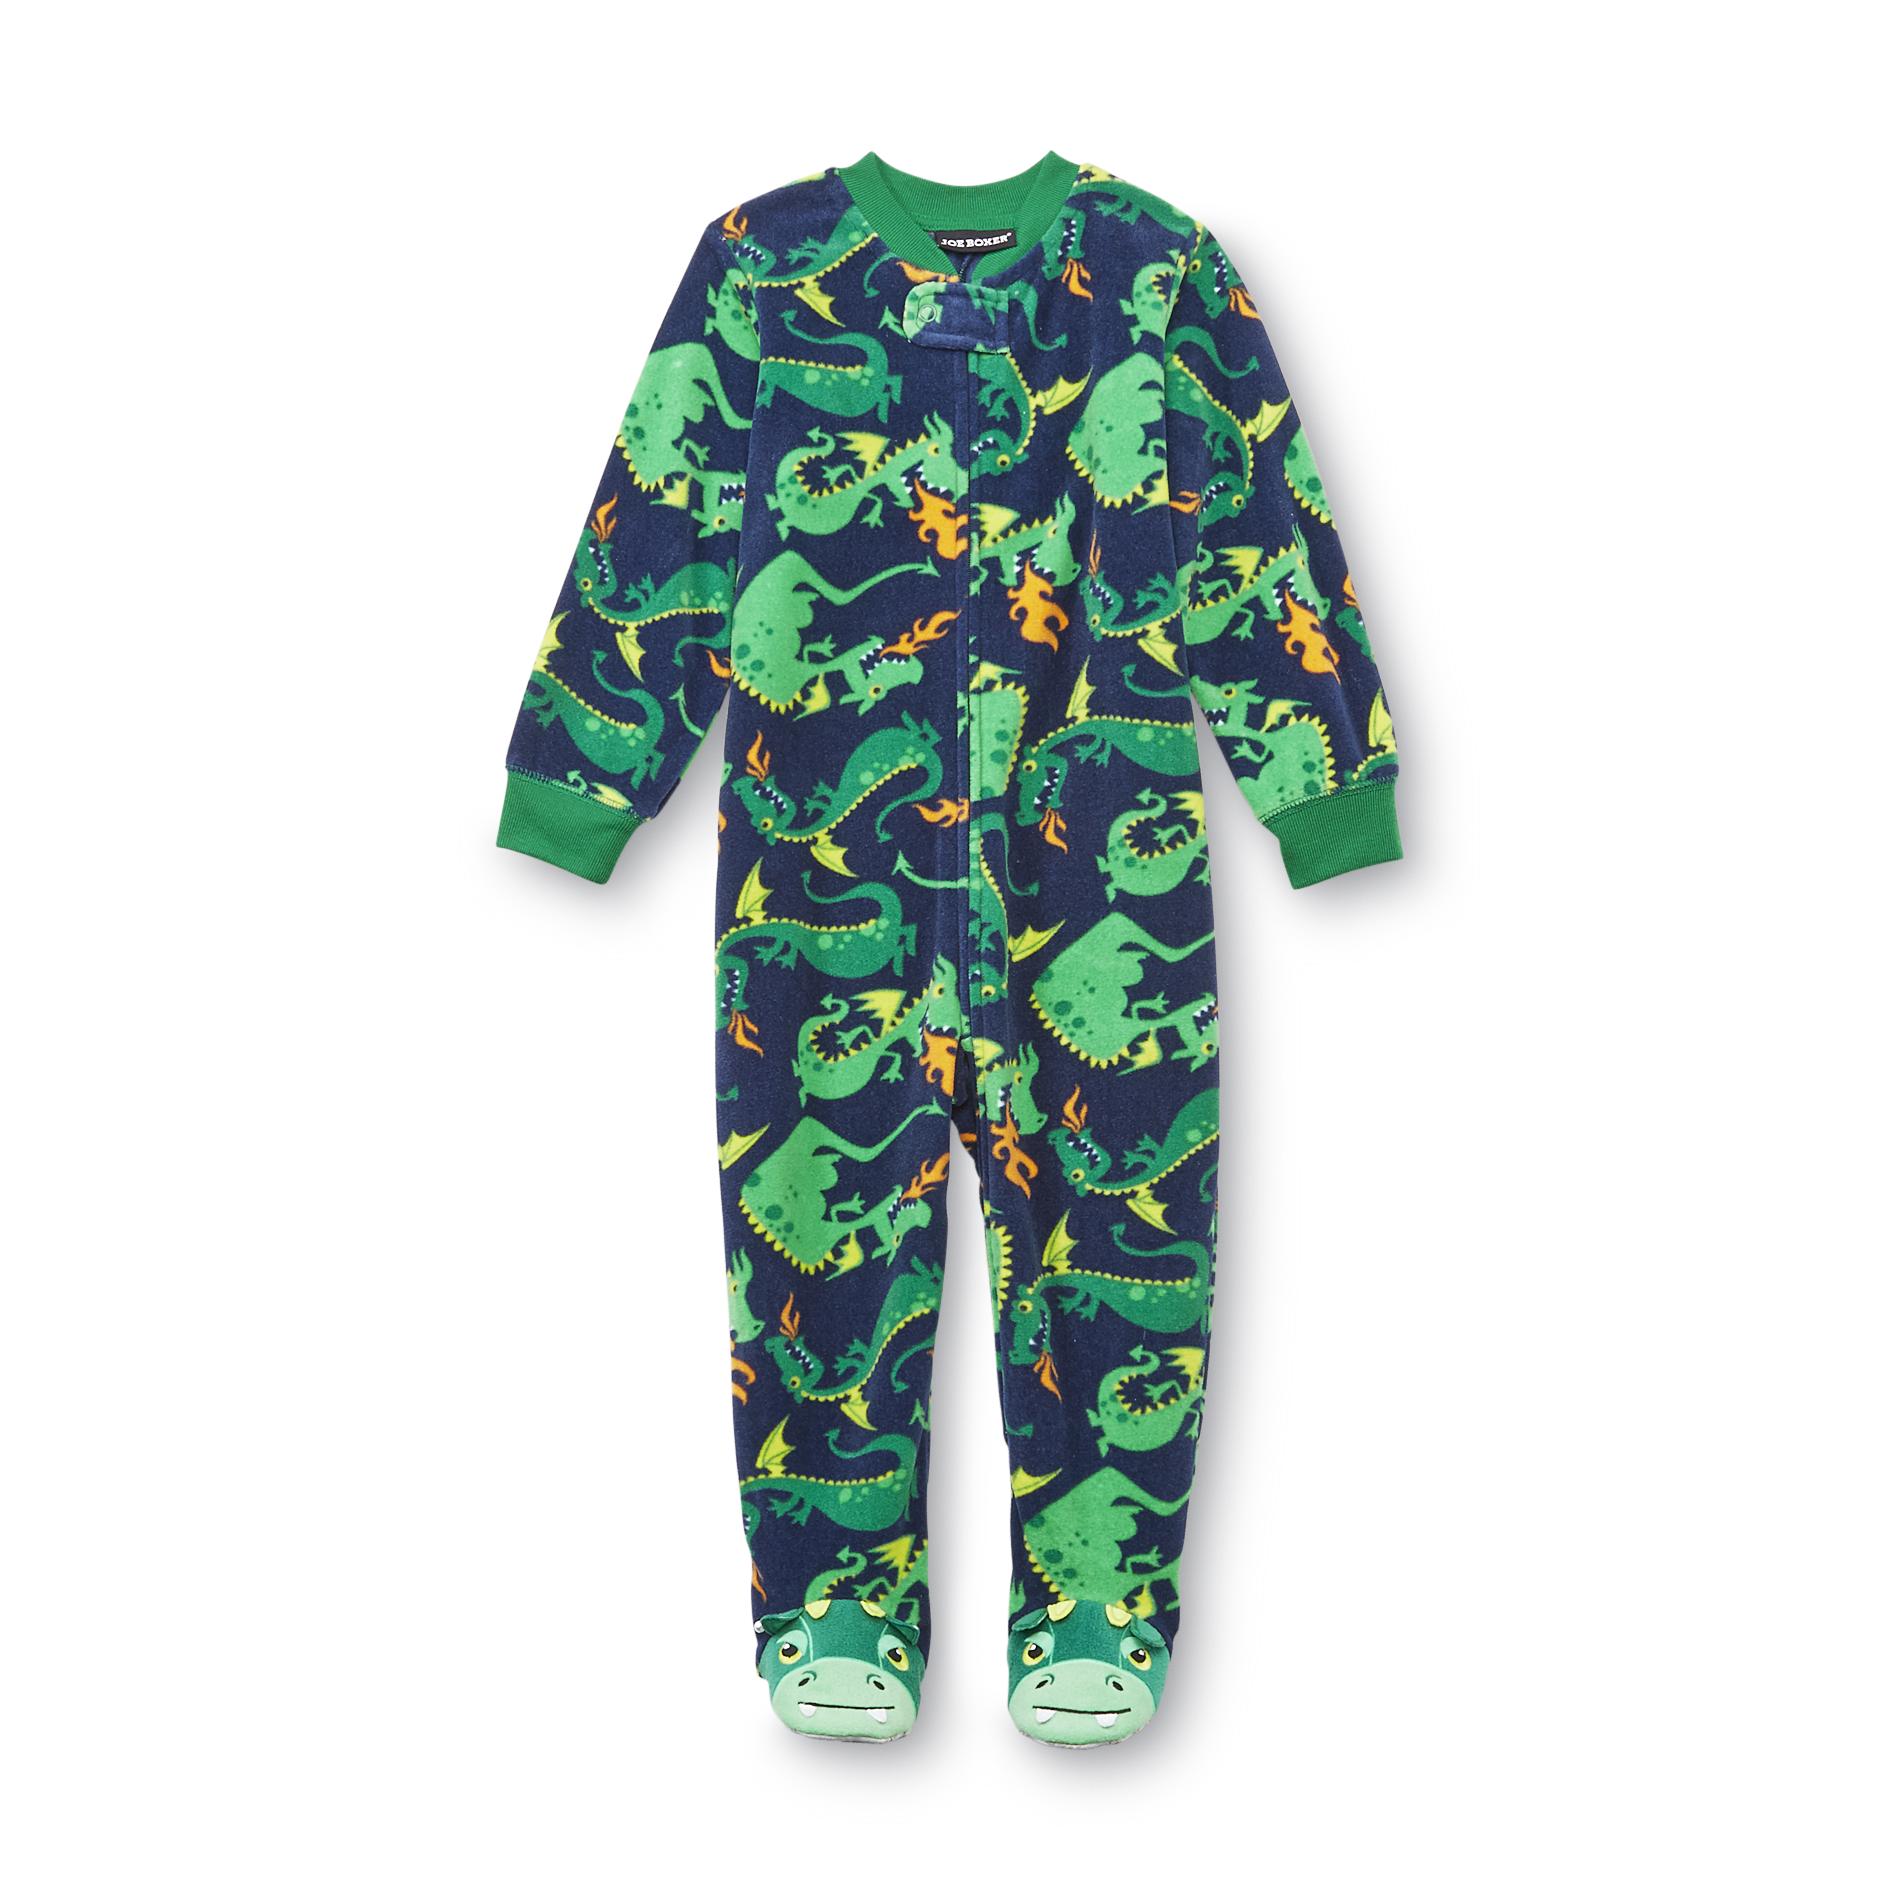 Joe Boxer Infant & Toddler Boy's Footed Fleece Sleeper - Dragons